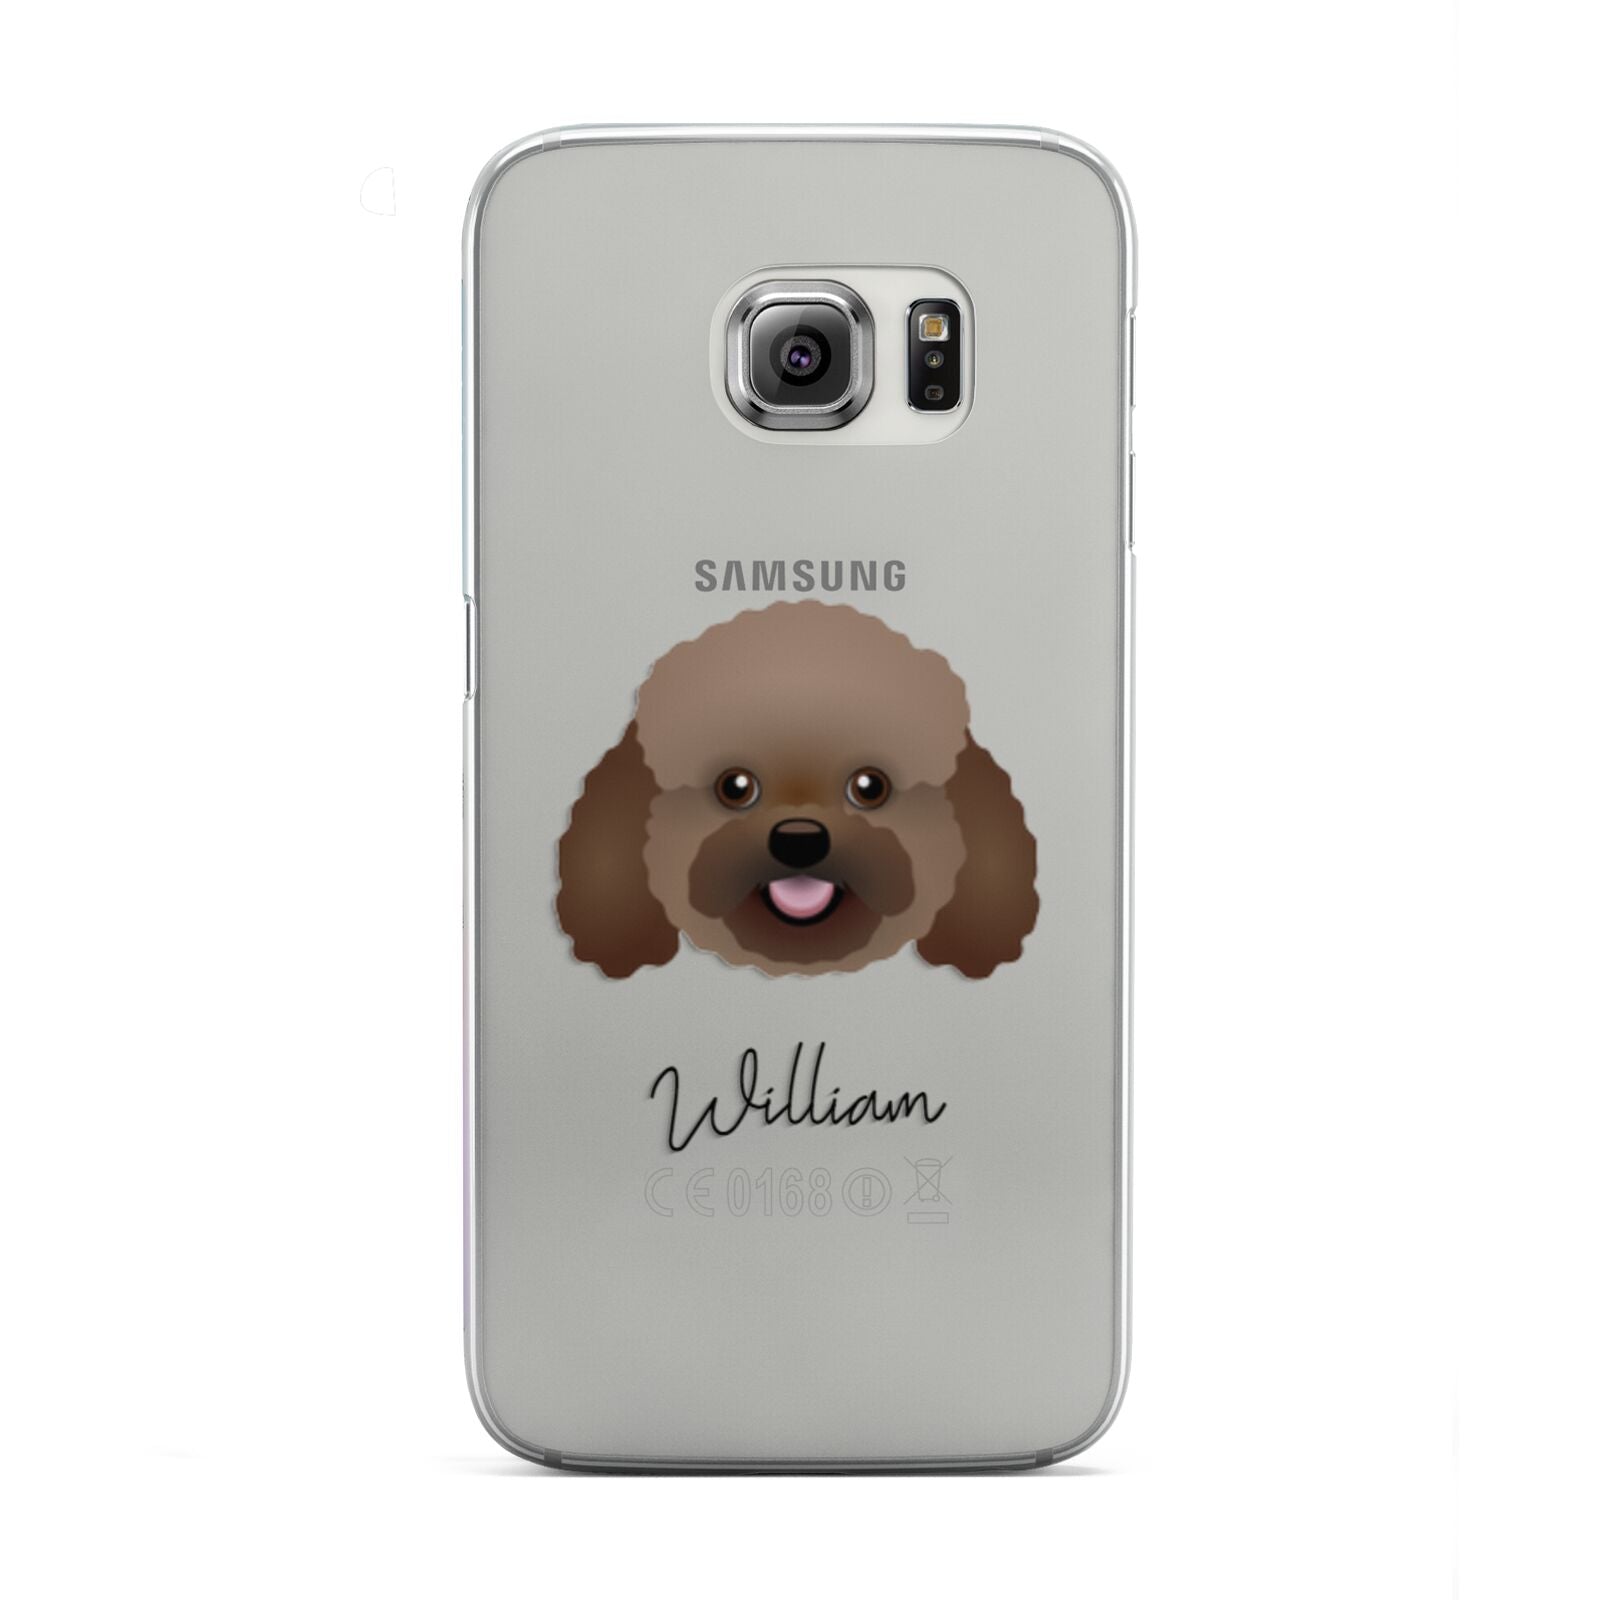 Bich poo Personalised Samsung Galaxy S6 Edge Case